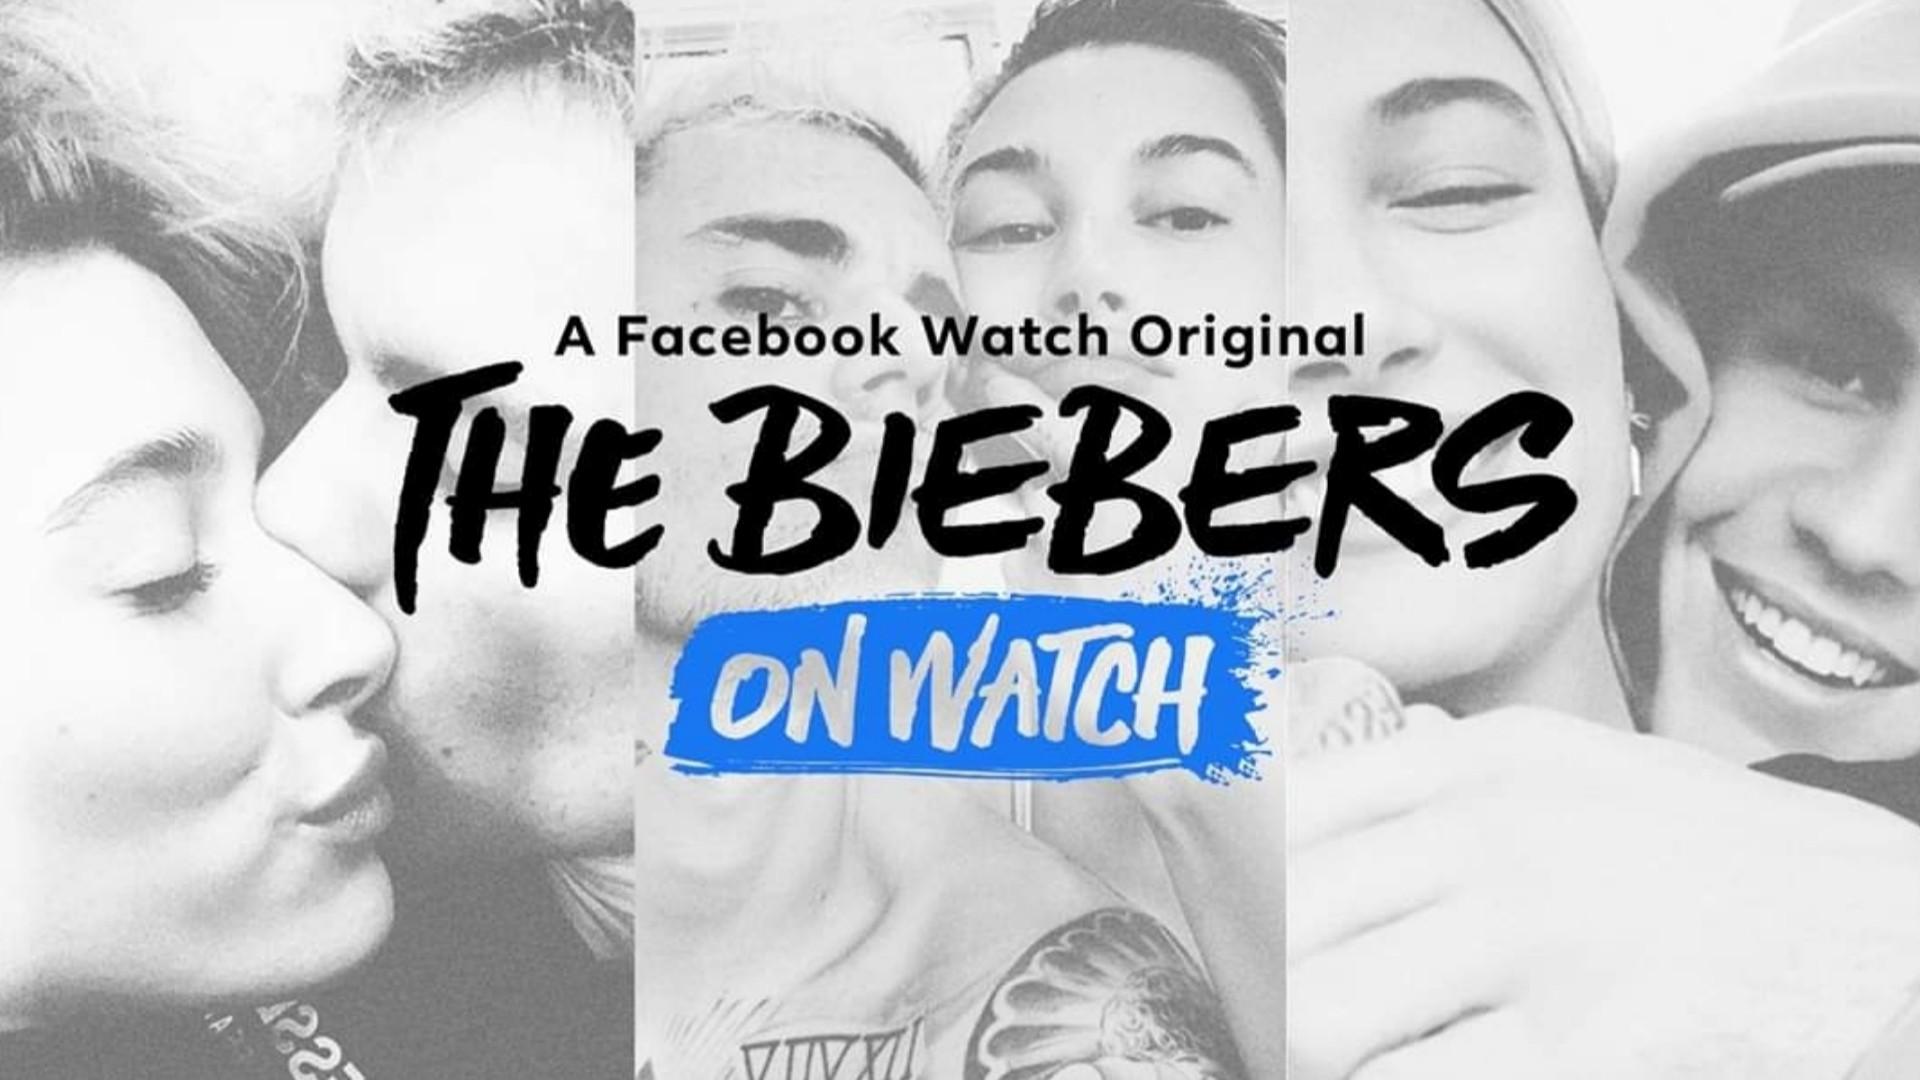 The Biebers on Watch